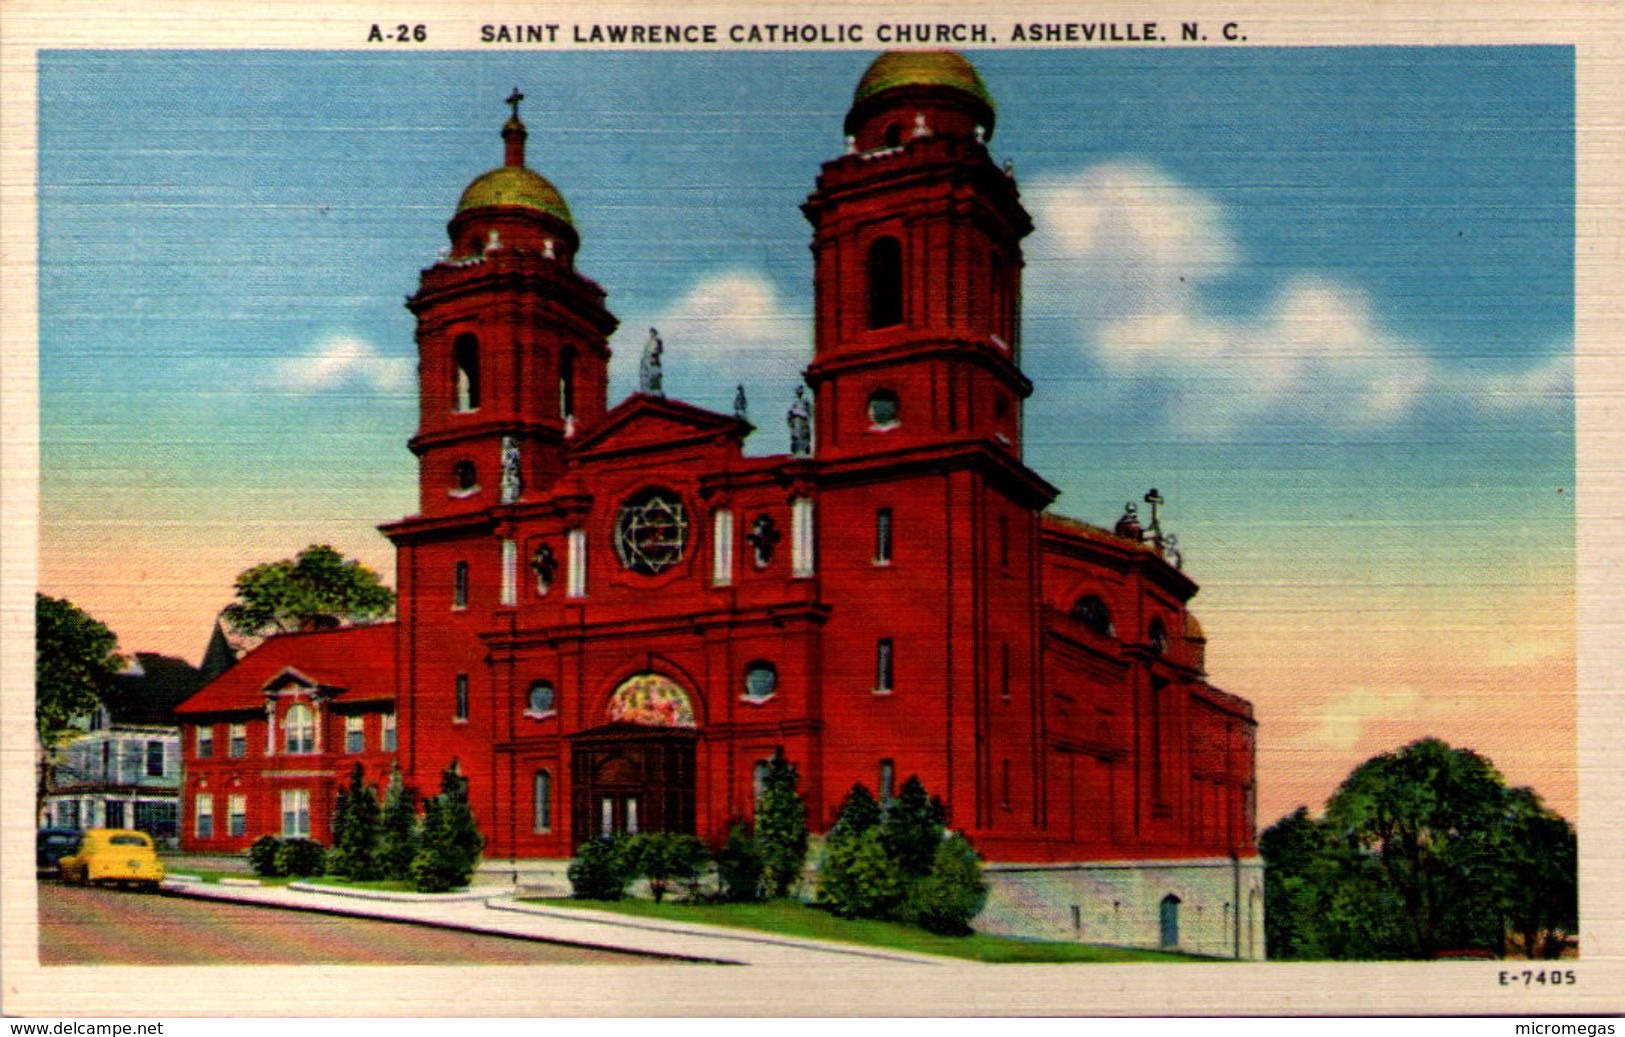 Saint Lawrence Catholic Church, Asheville, N.C. - Asheville